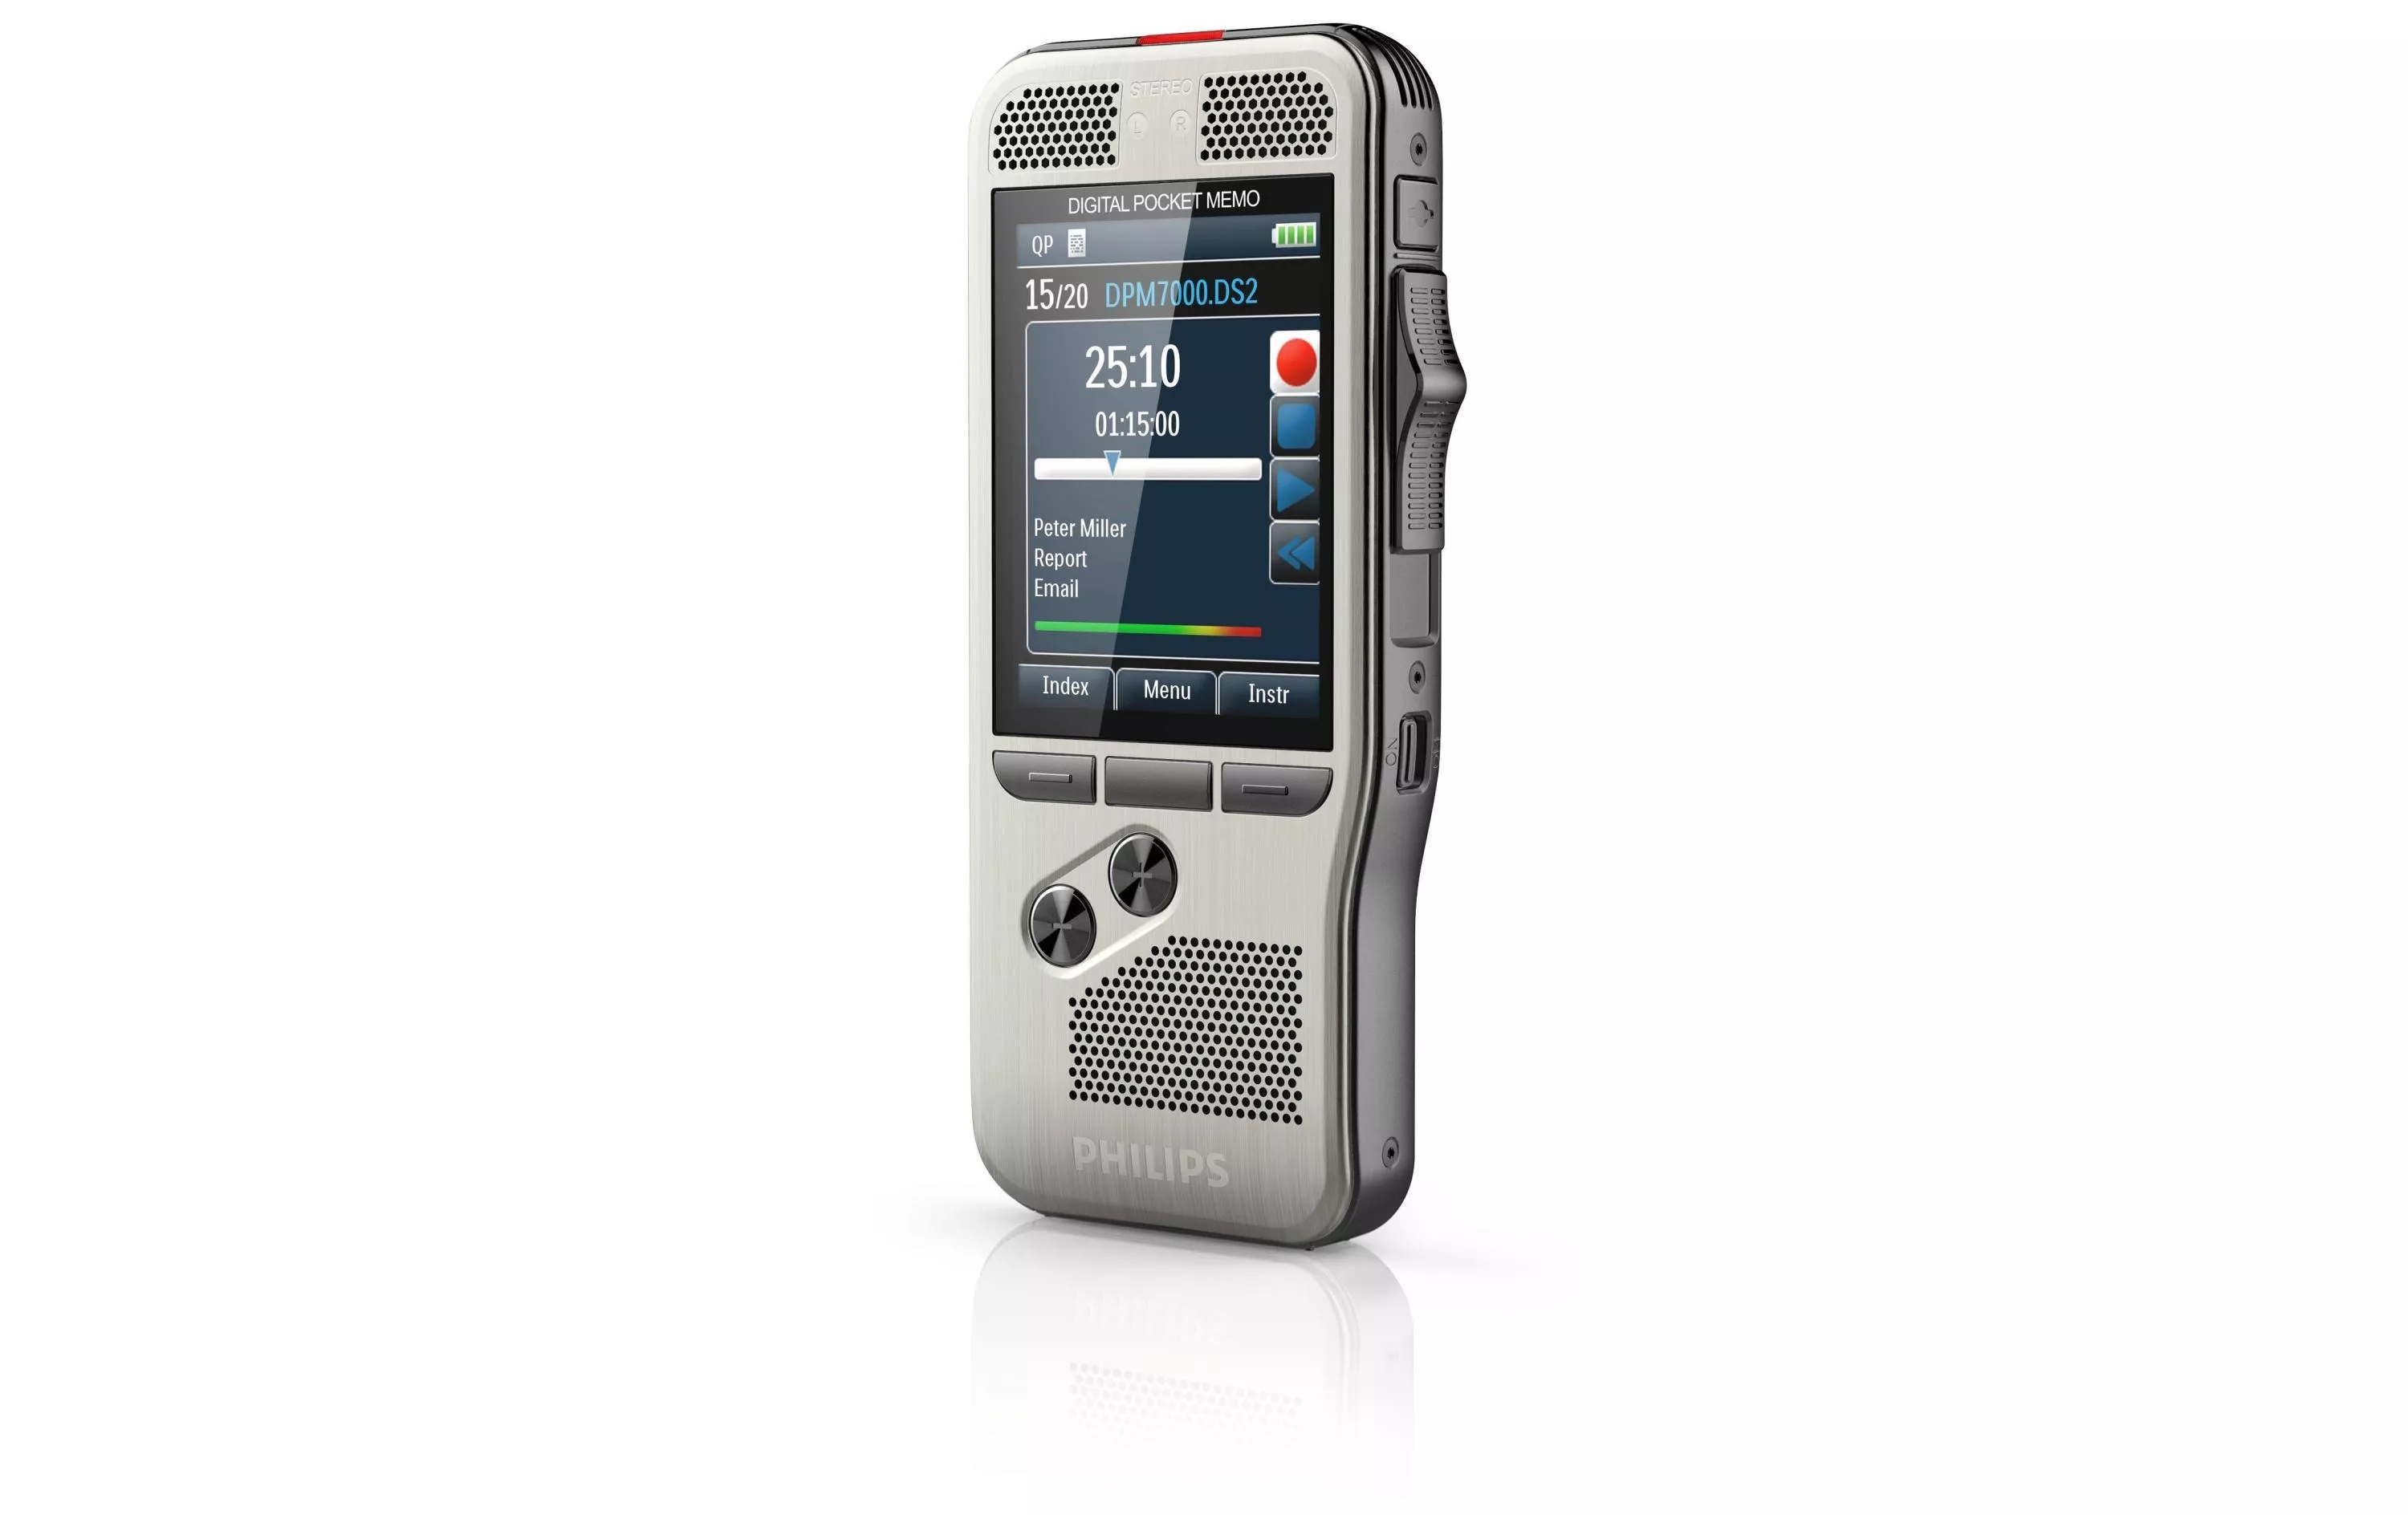 DPM7000 Digital Pocket Memo Dictaphone